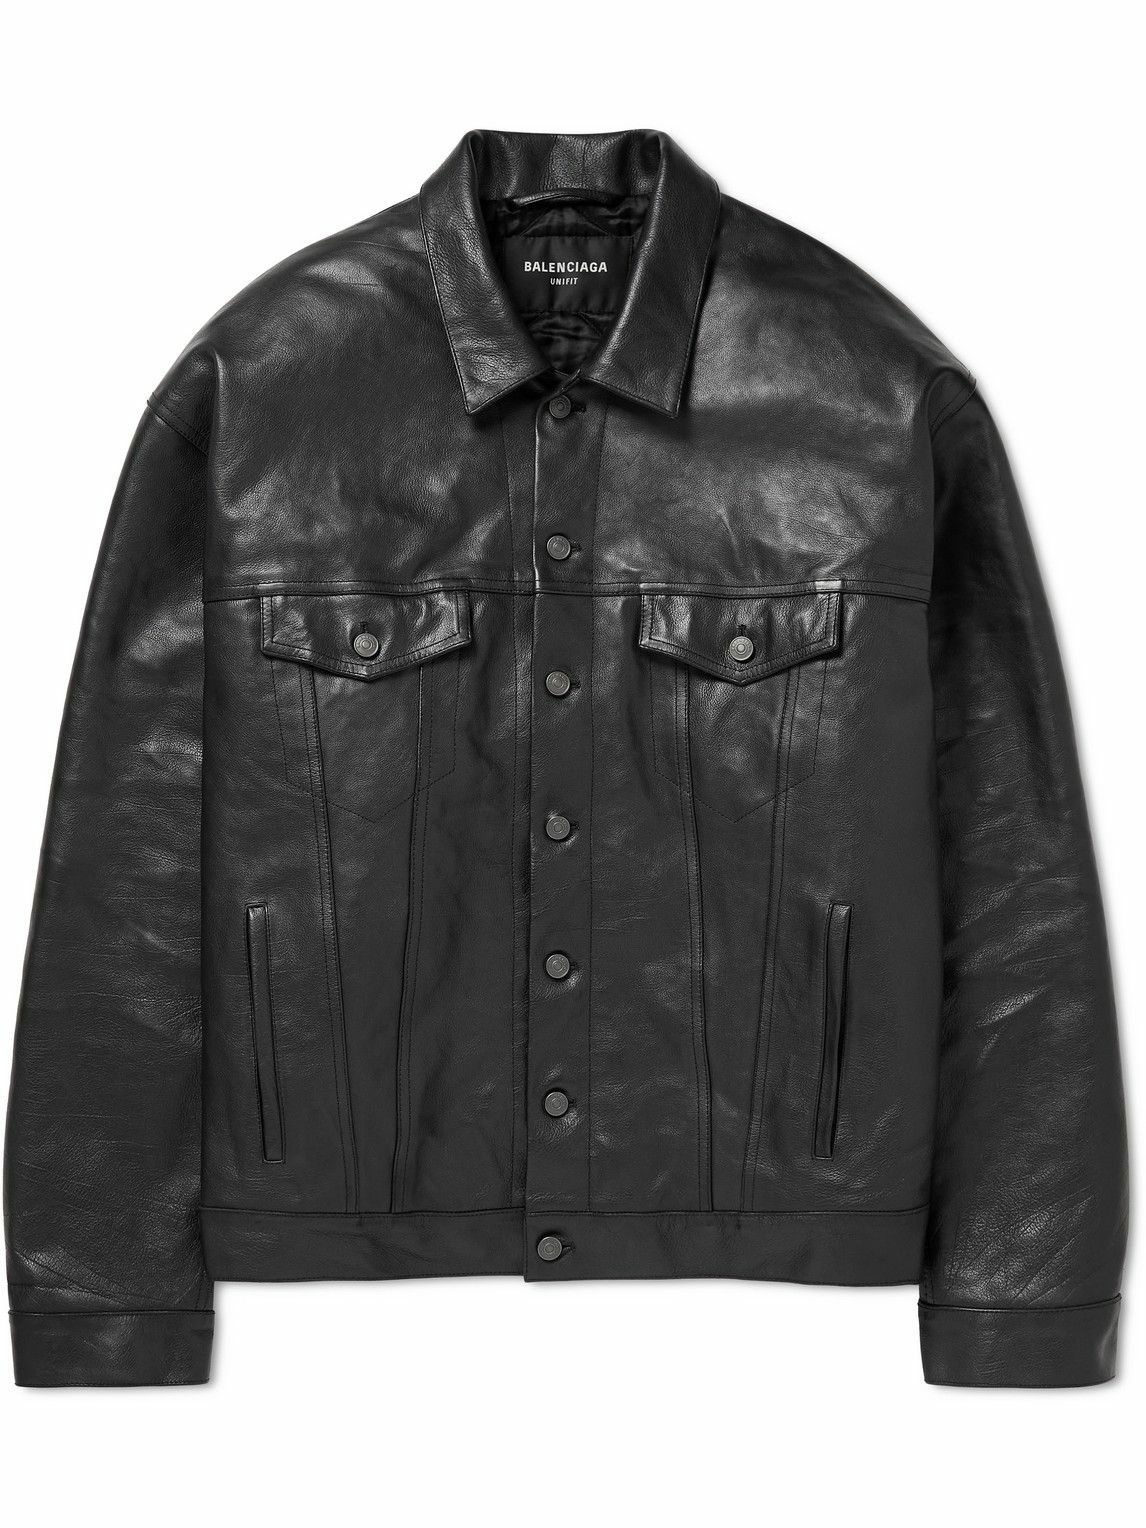 Cheap balenciaga logo leather jacket big sale  OFF 63